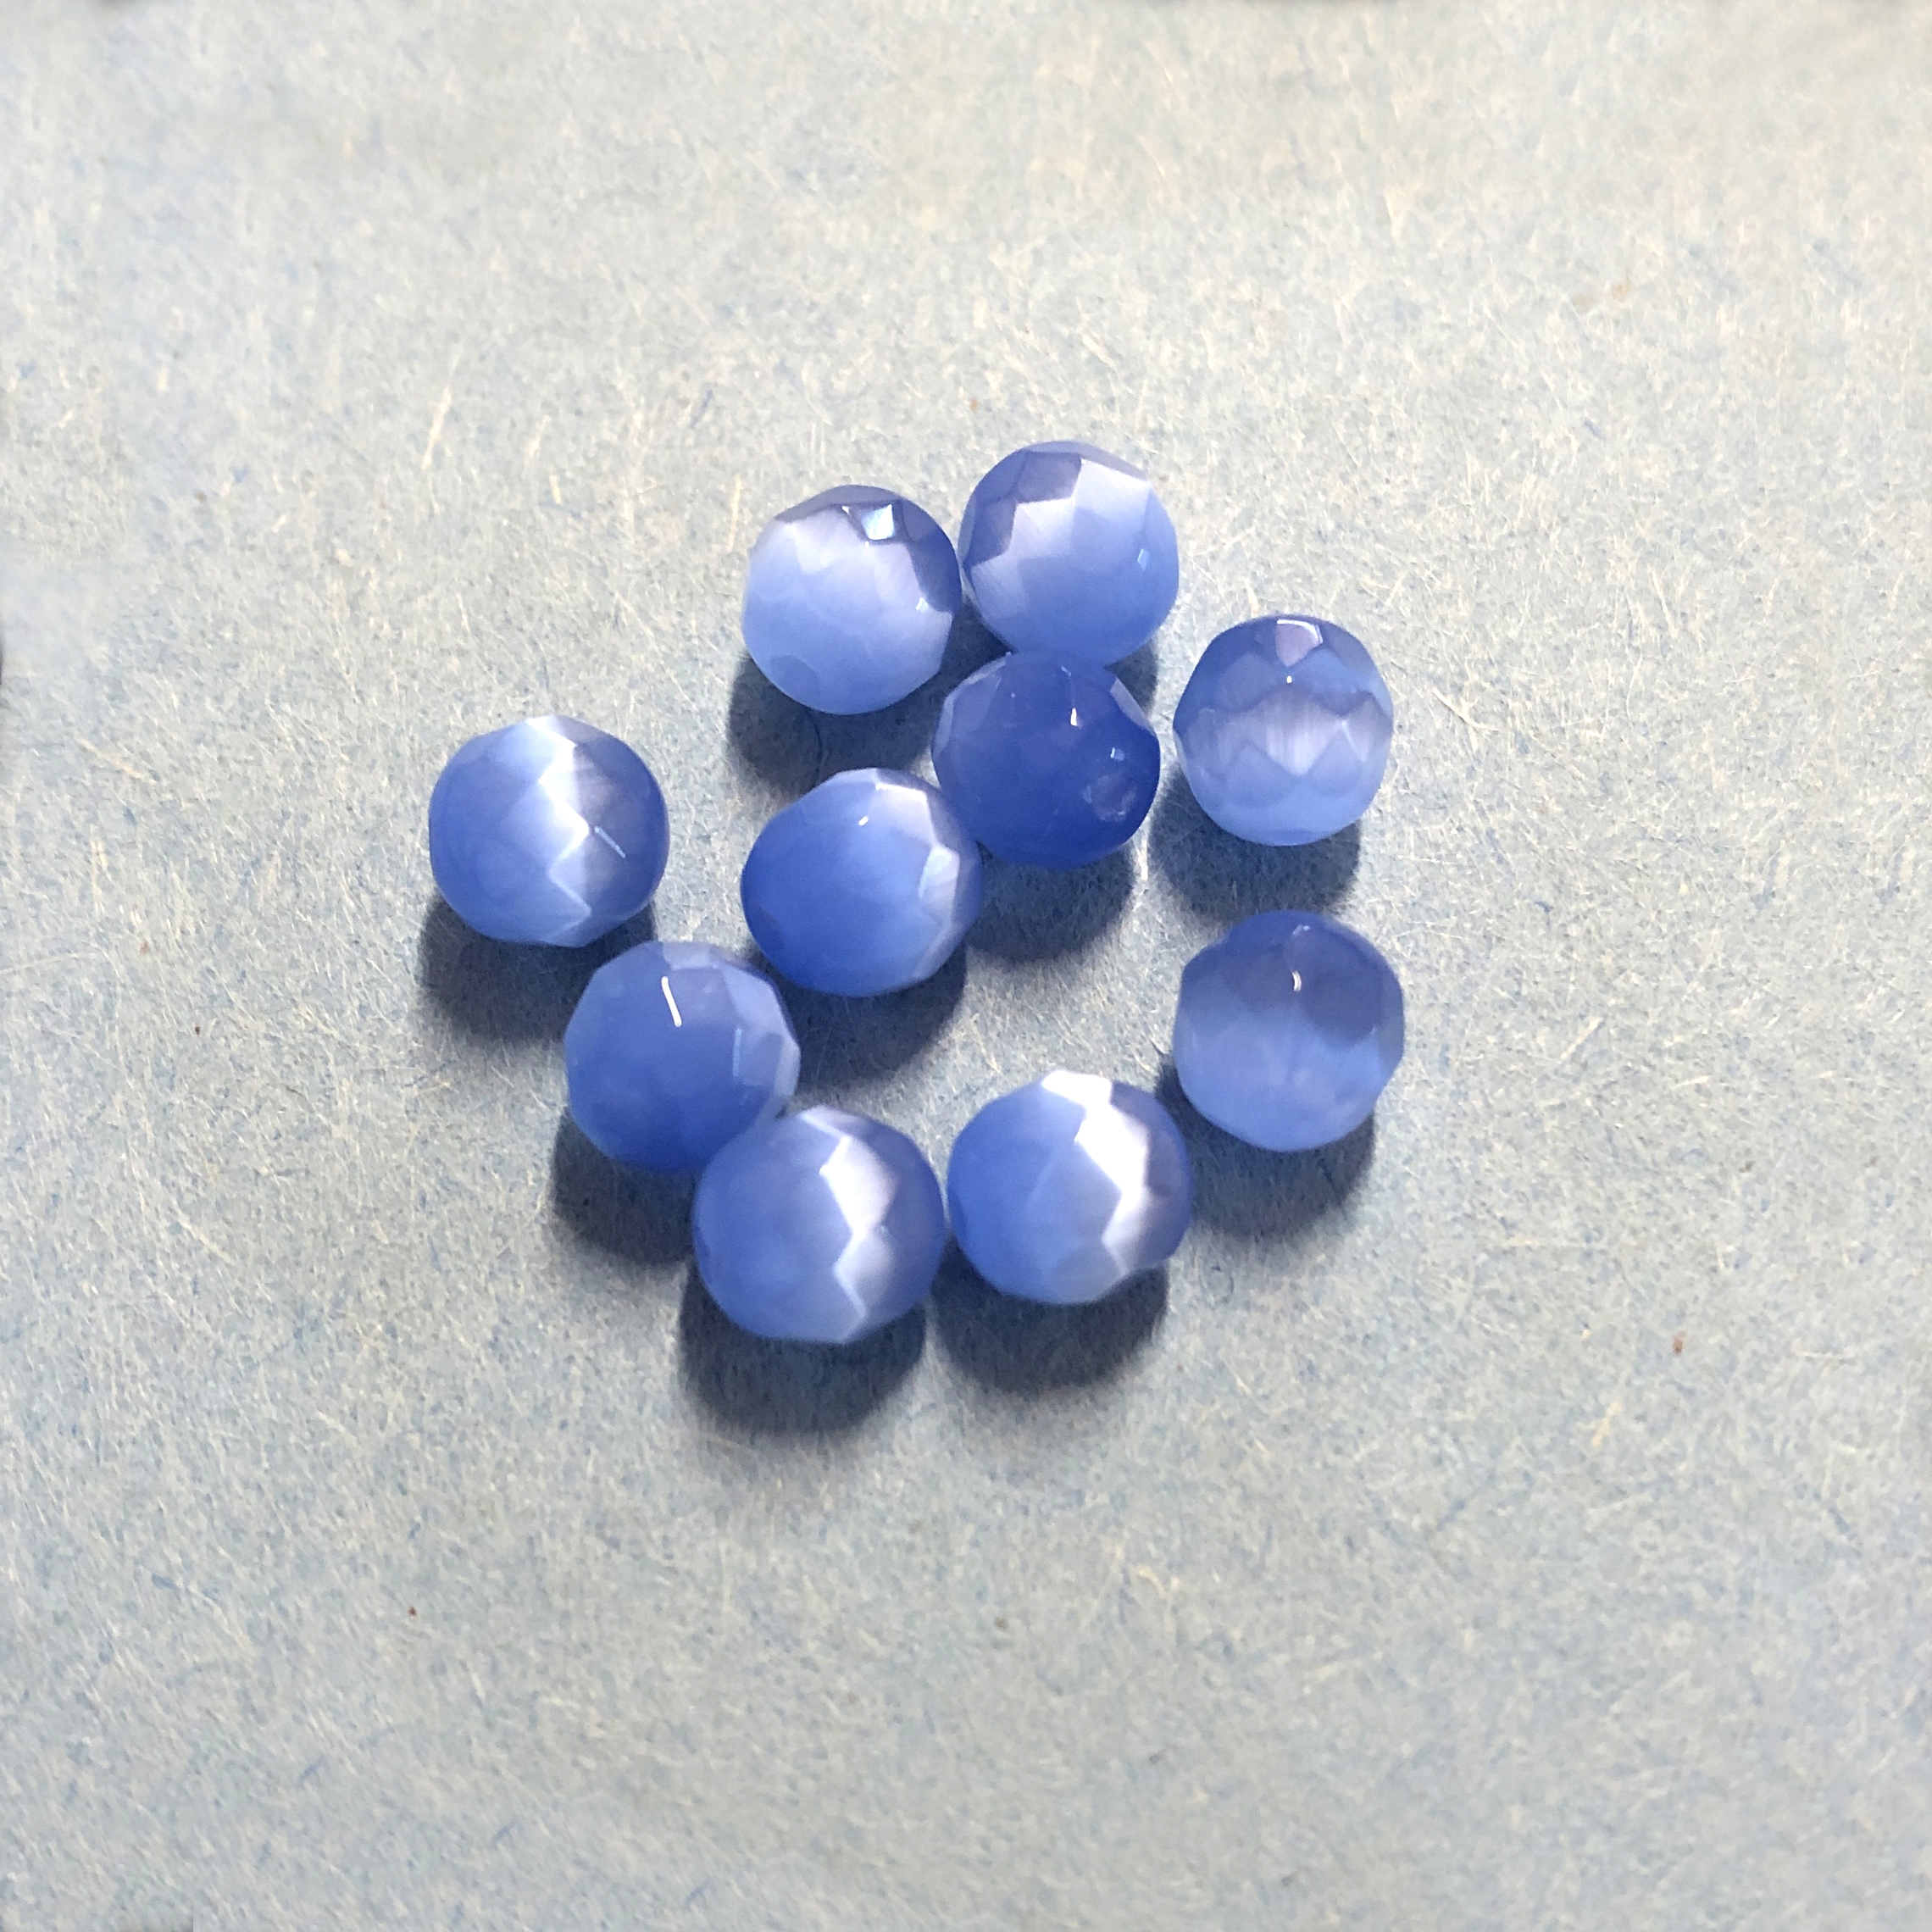 A3811 50 pcs 6mm Cat's Eye Beads Cobelt Blue